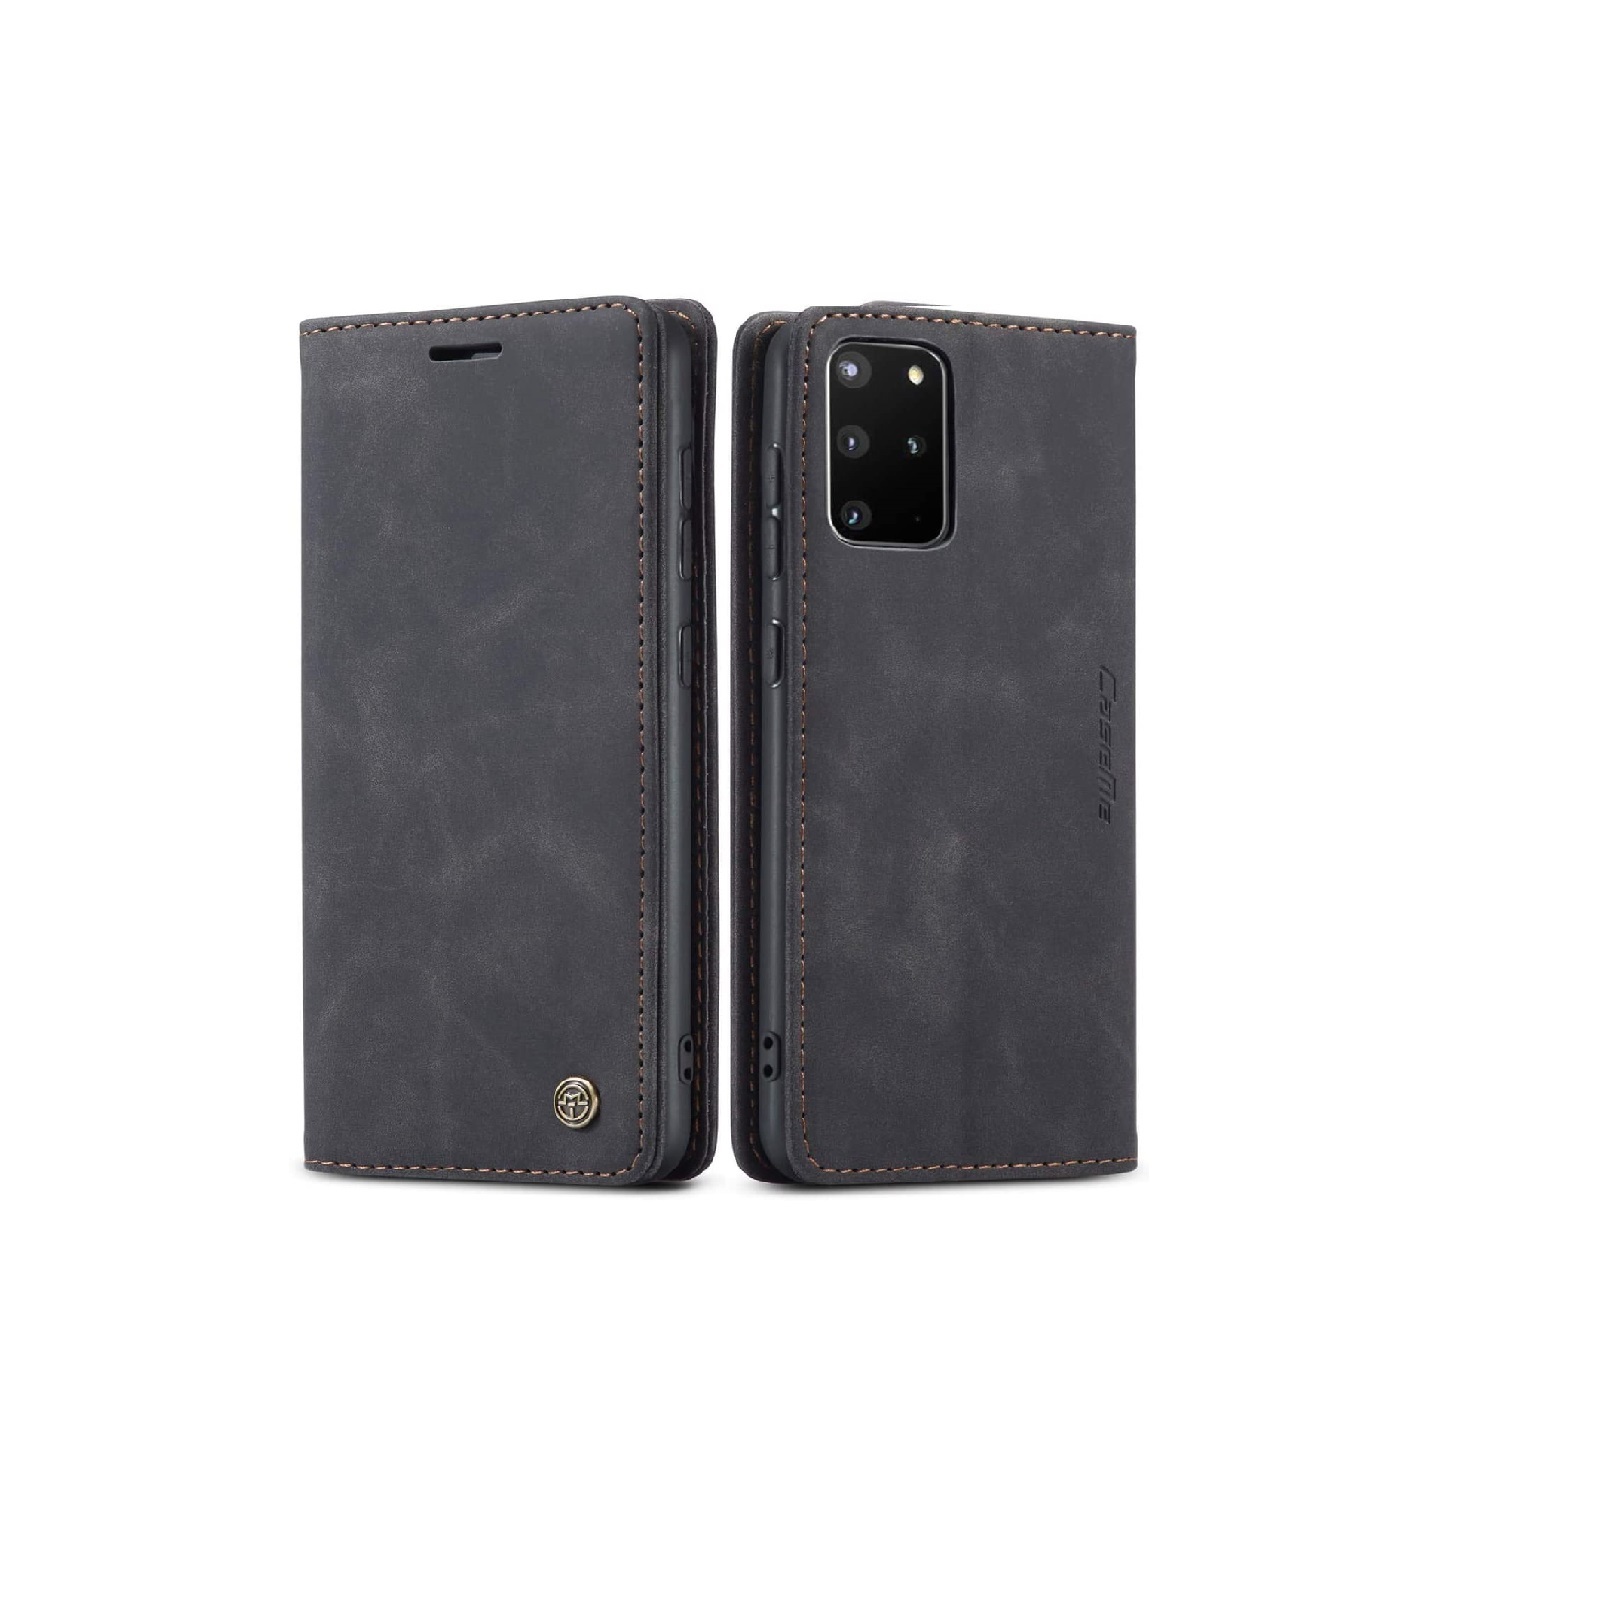 Telstra Samsung S20 Plus Wallet Case [Brand New]